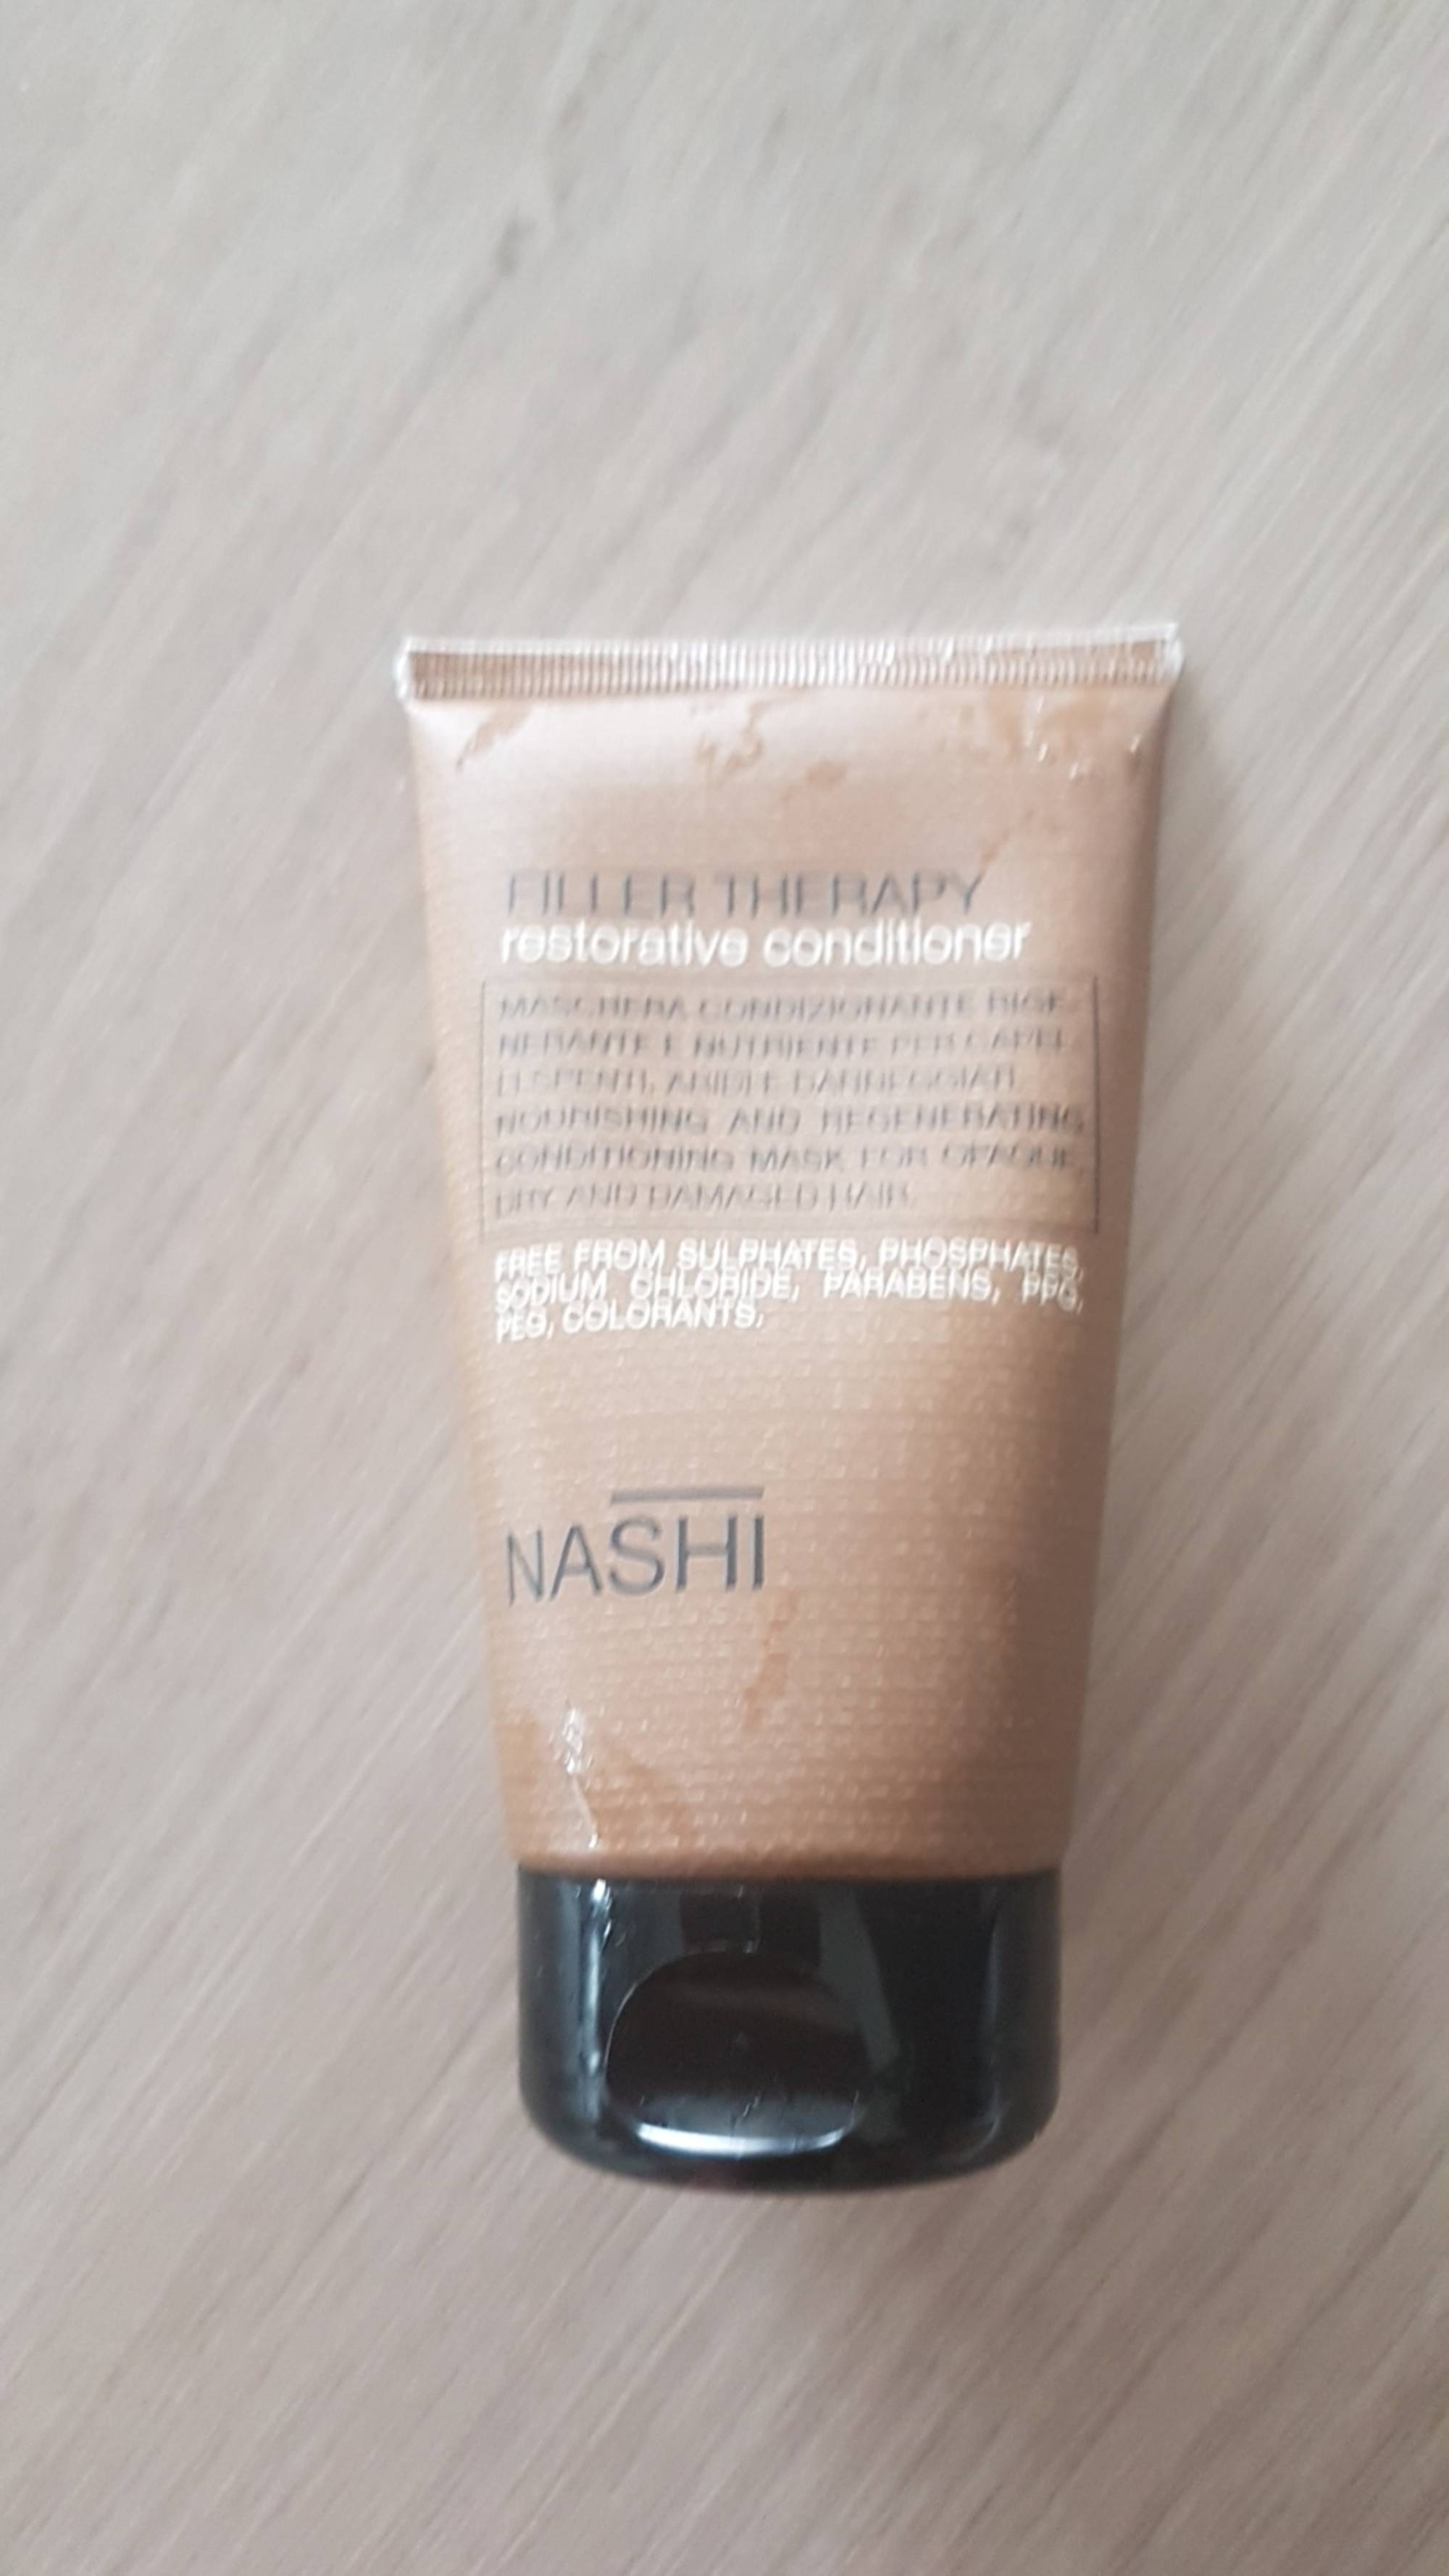 NASHI - Filler therapy - Restorative conditioner